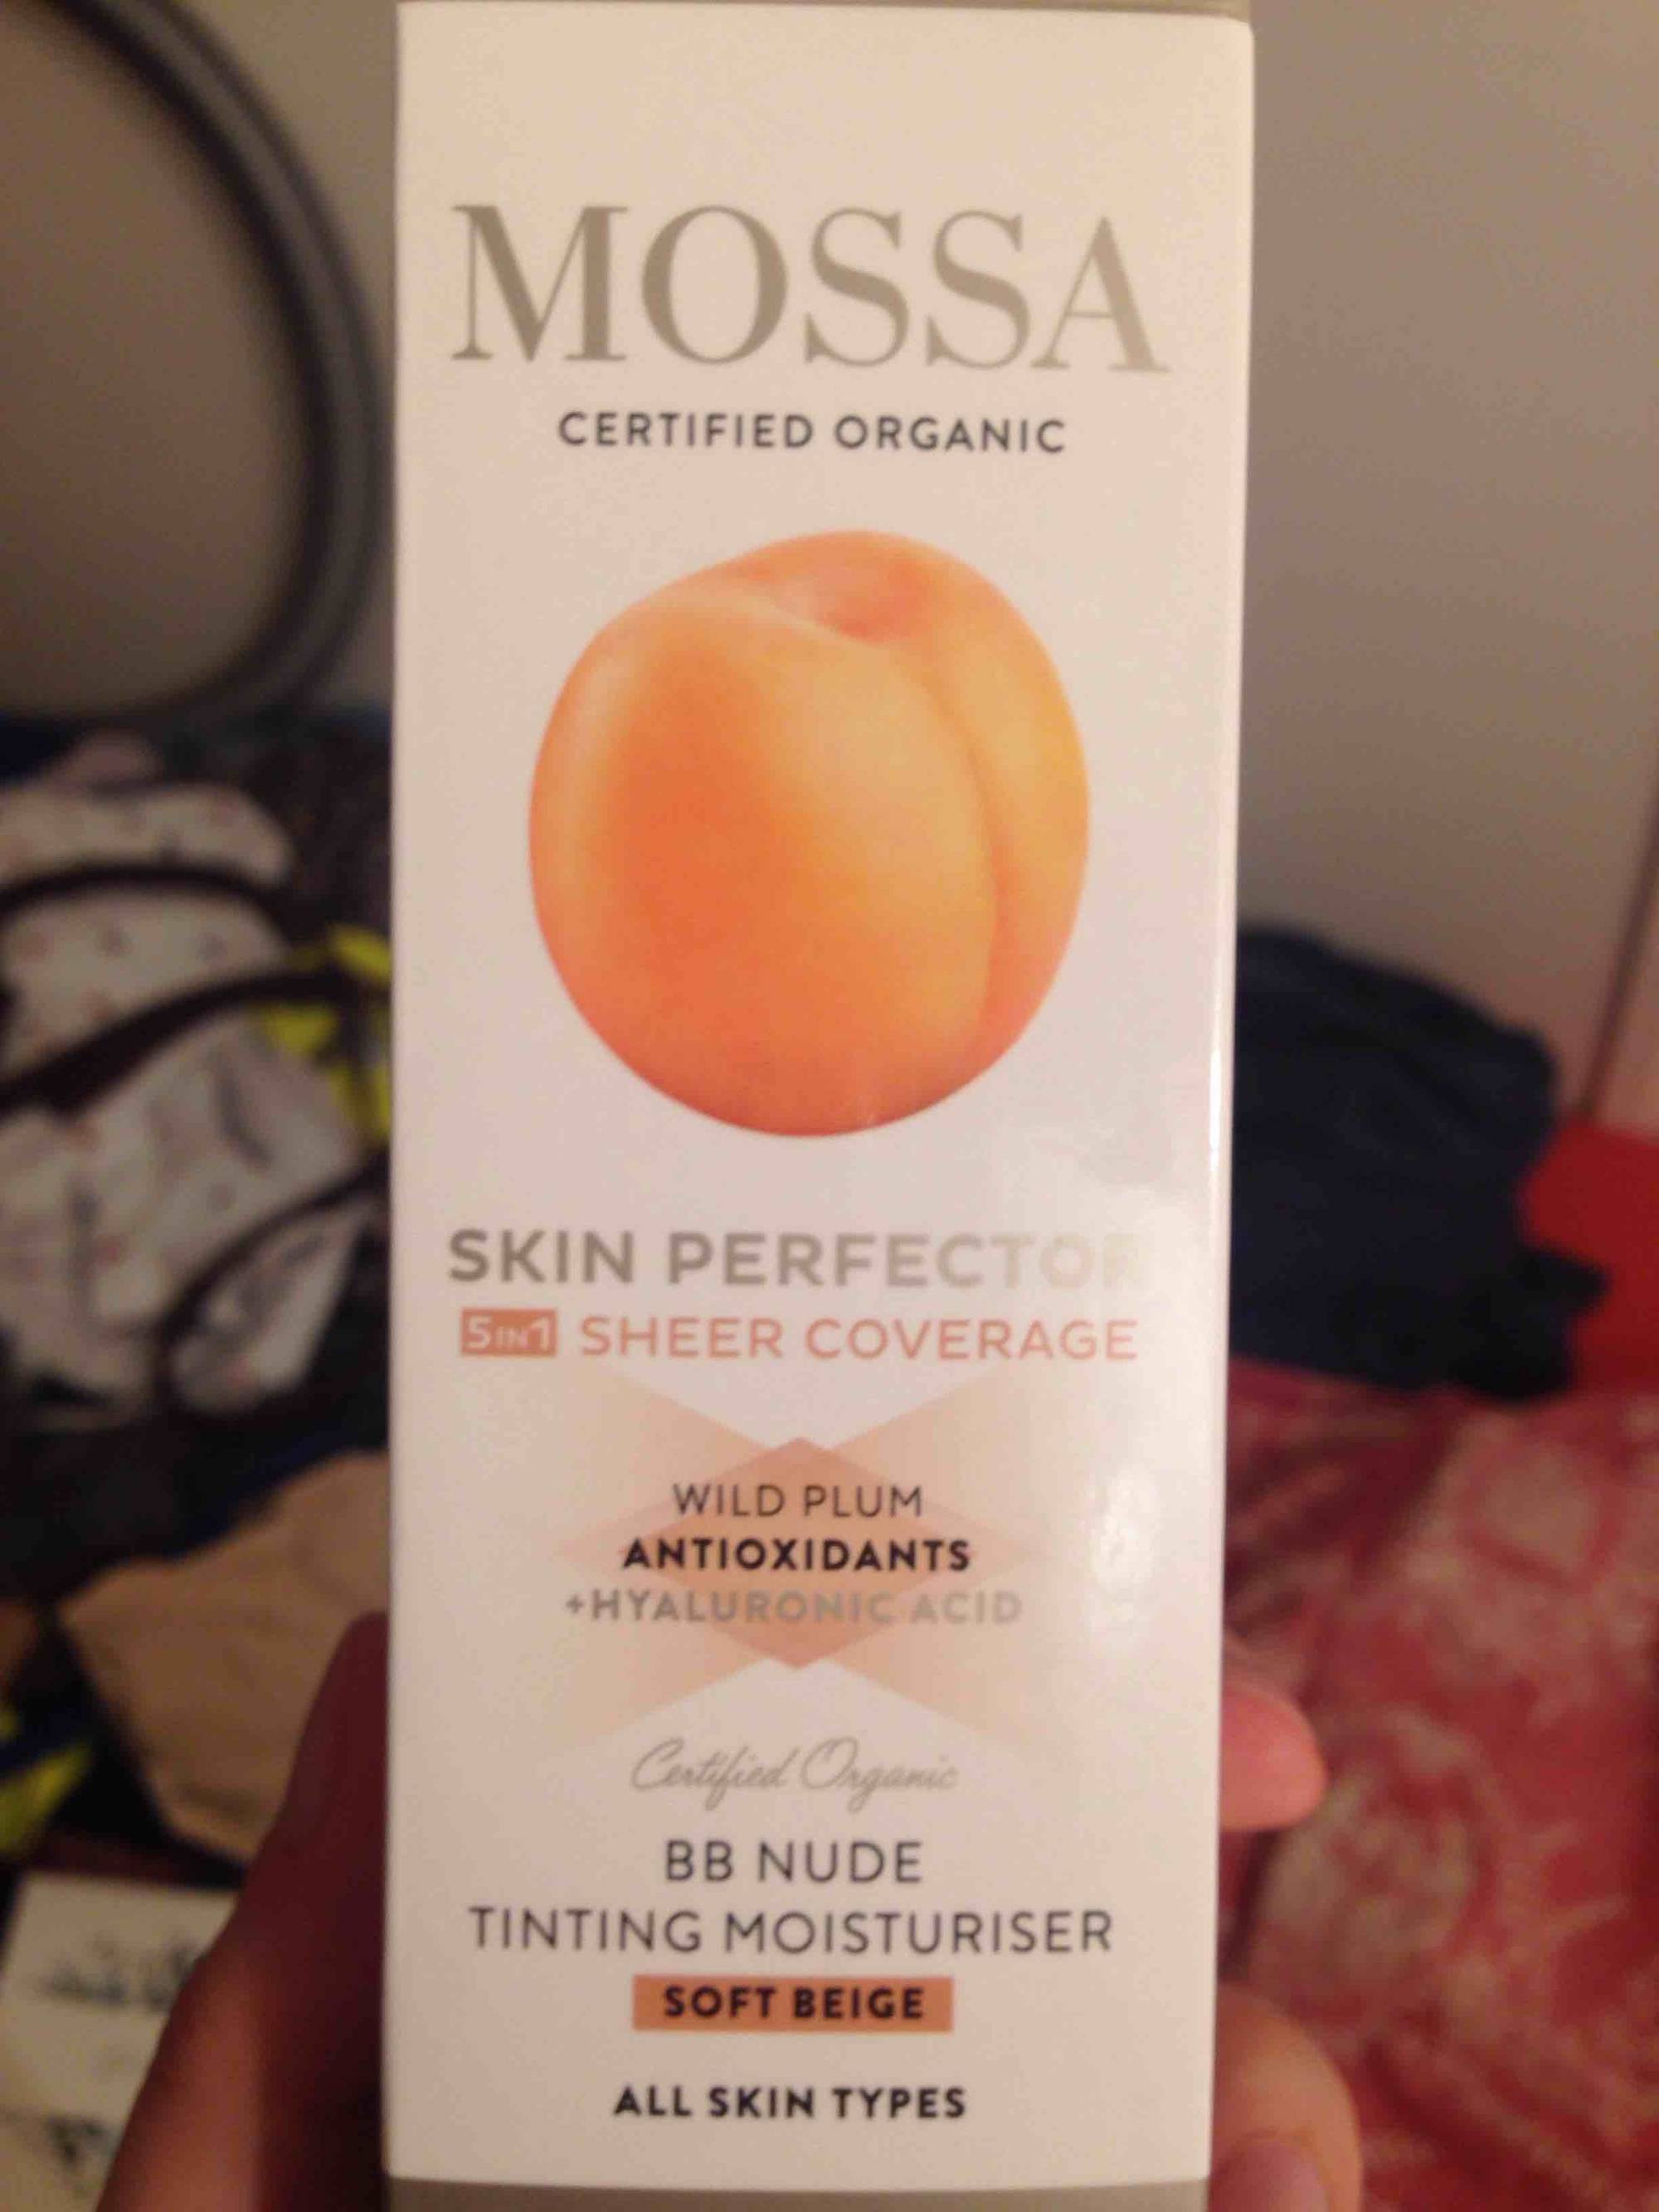 MOSSA - Skin perfector - BB nude tinting moisturiser 5 in 1 soft beige